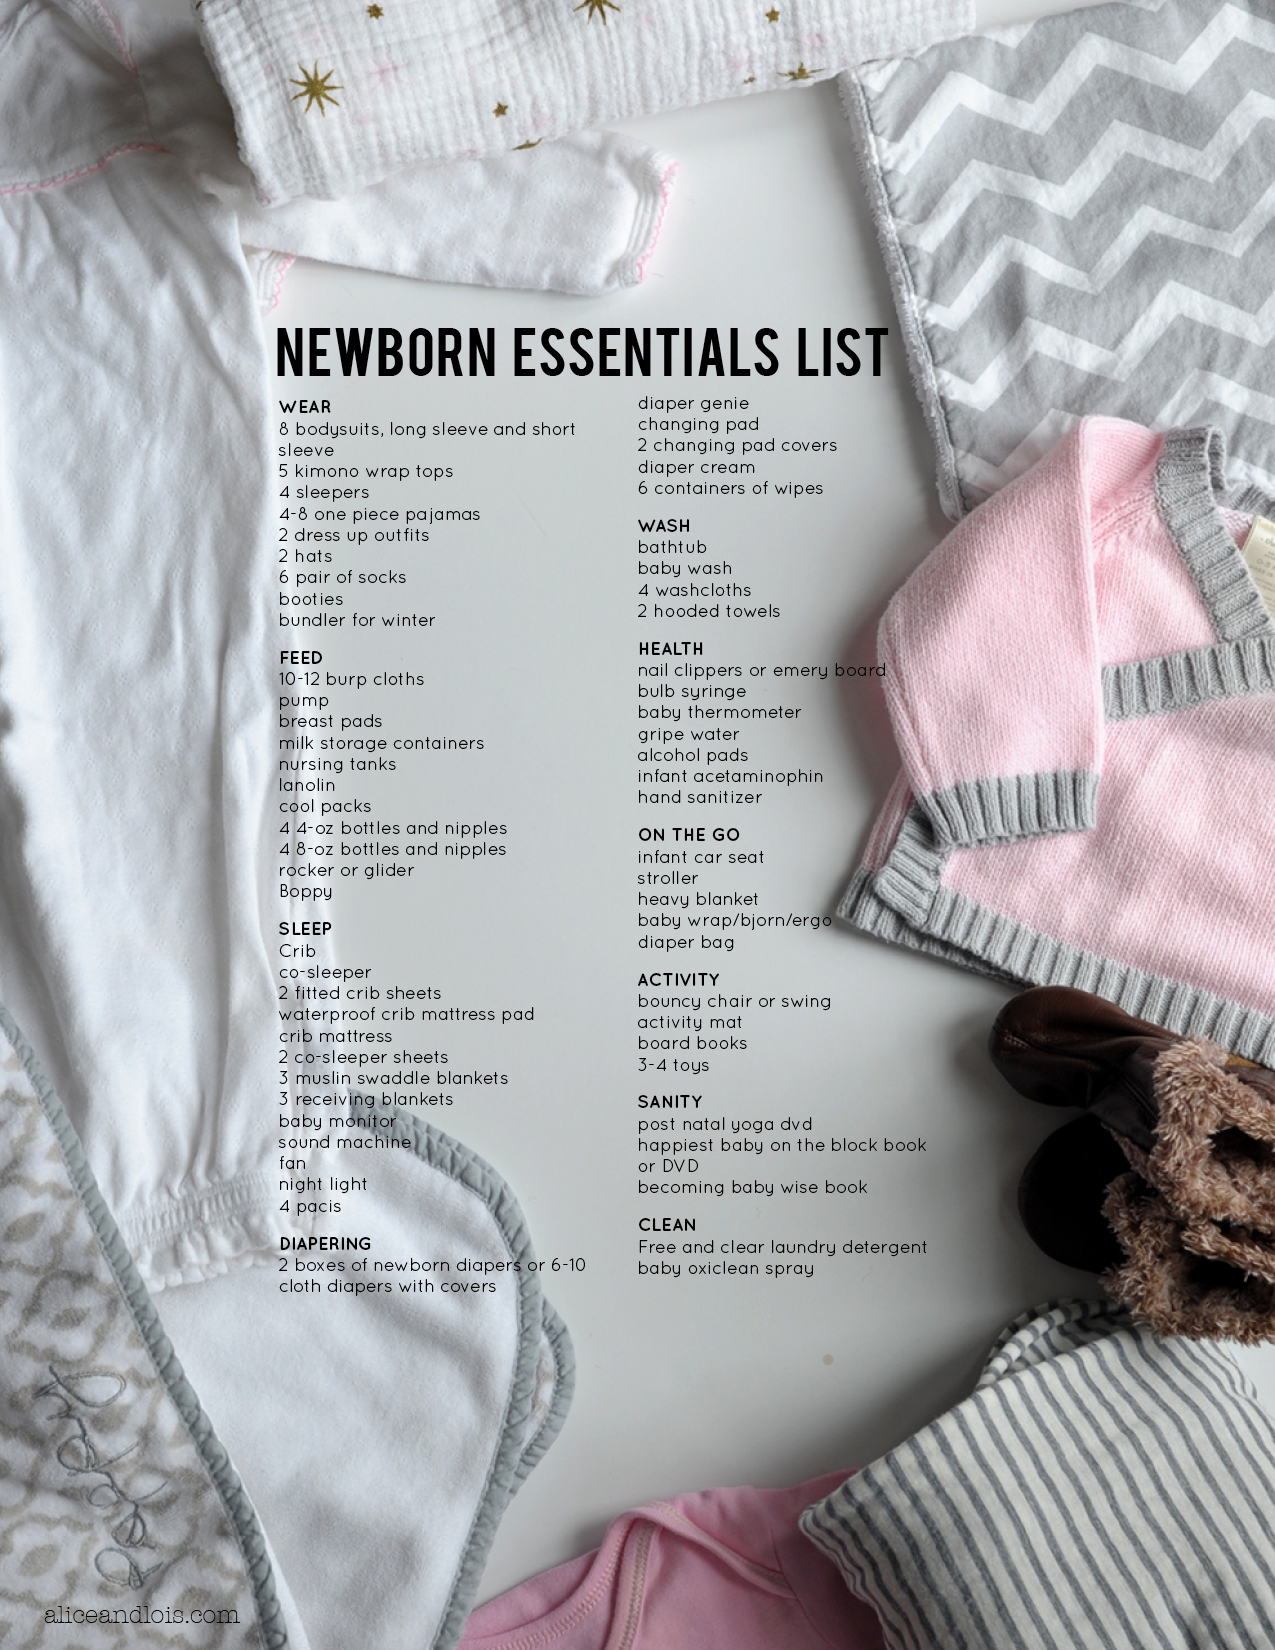 The Newborn Essentials List on aliceandlois.com 